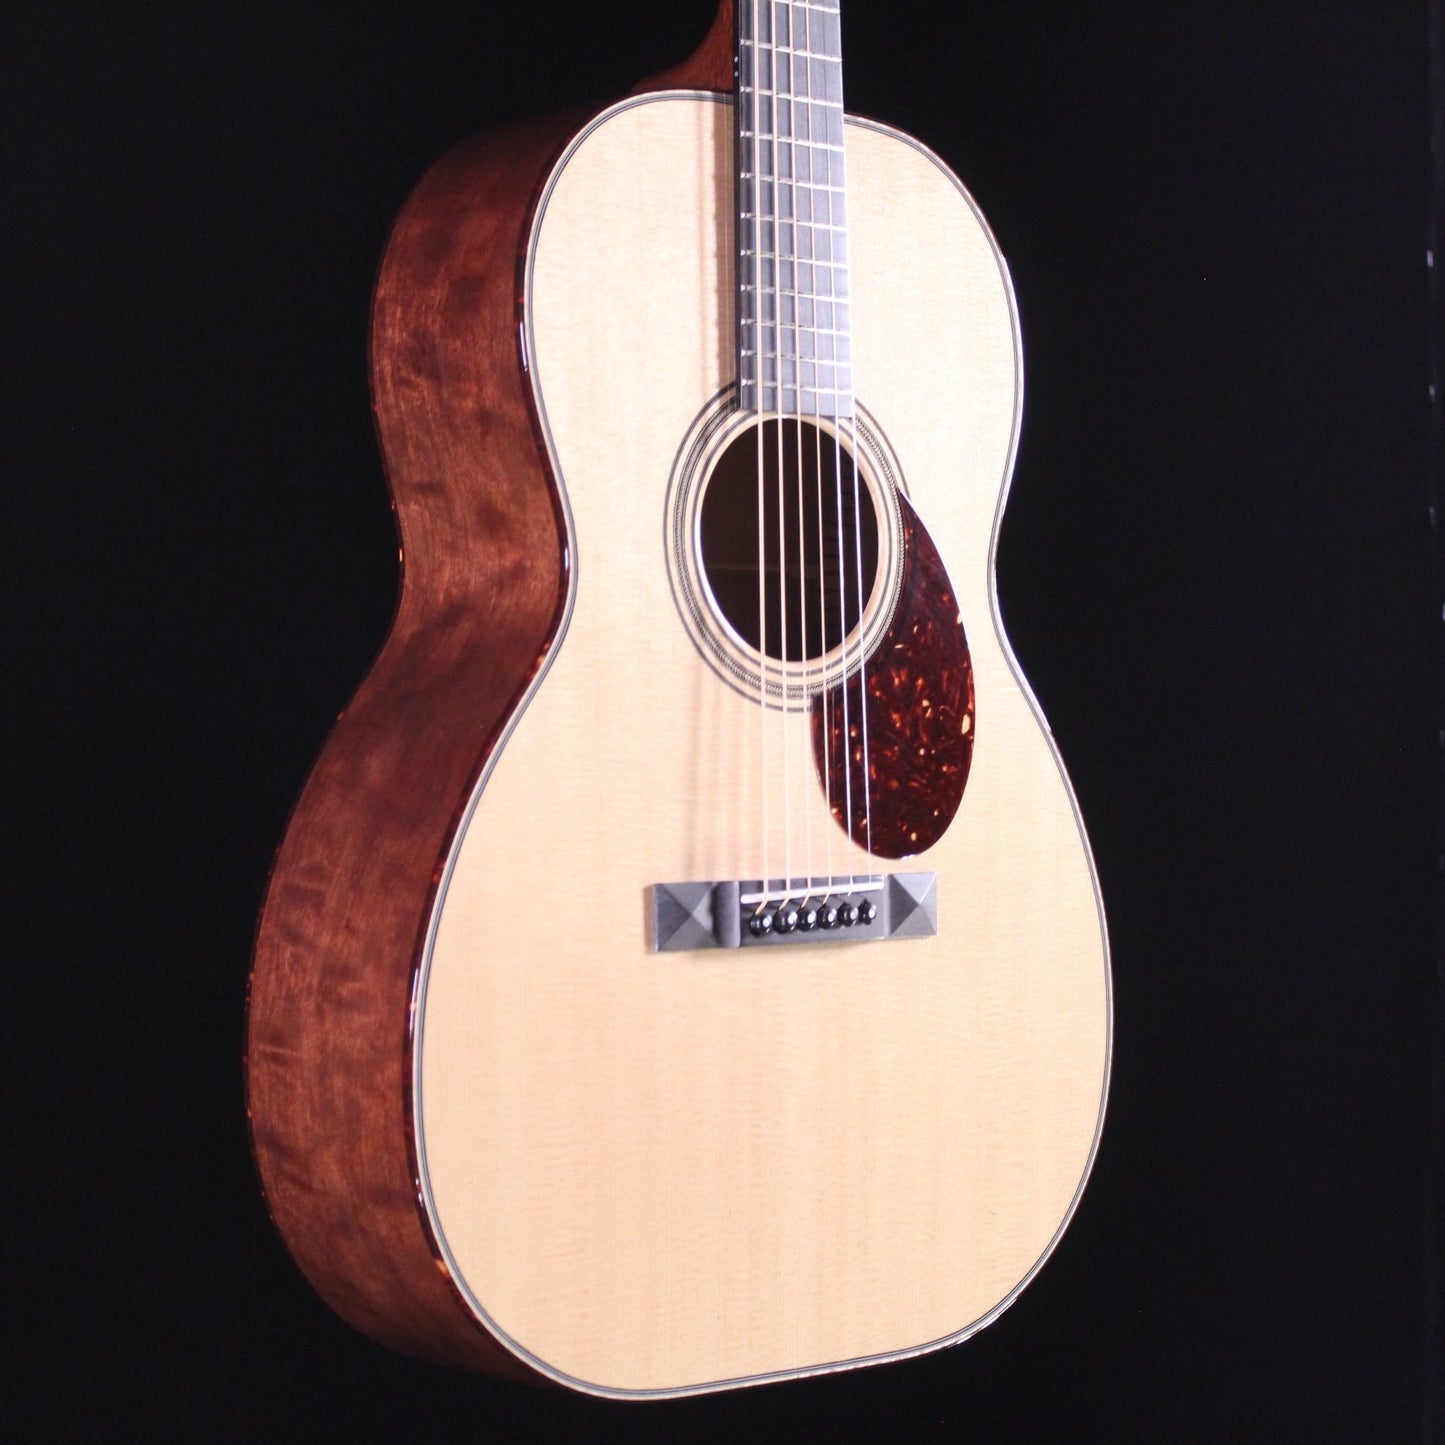 Huss and Dalton OOO-SP Custom (Cherry/Sitka) - Express Shipping - (HD-015) Serial: 4809 - PLEK'd-1-Righteous Guitars